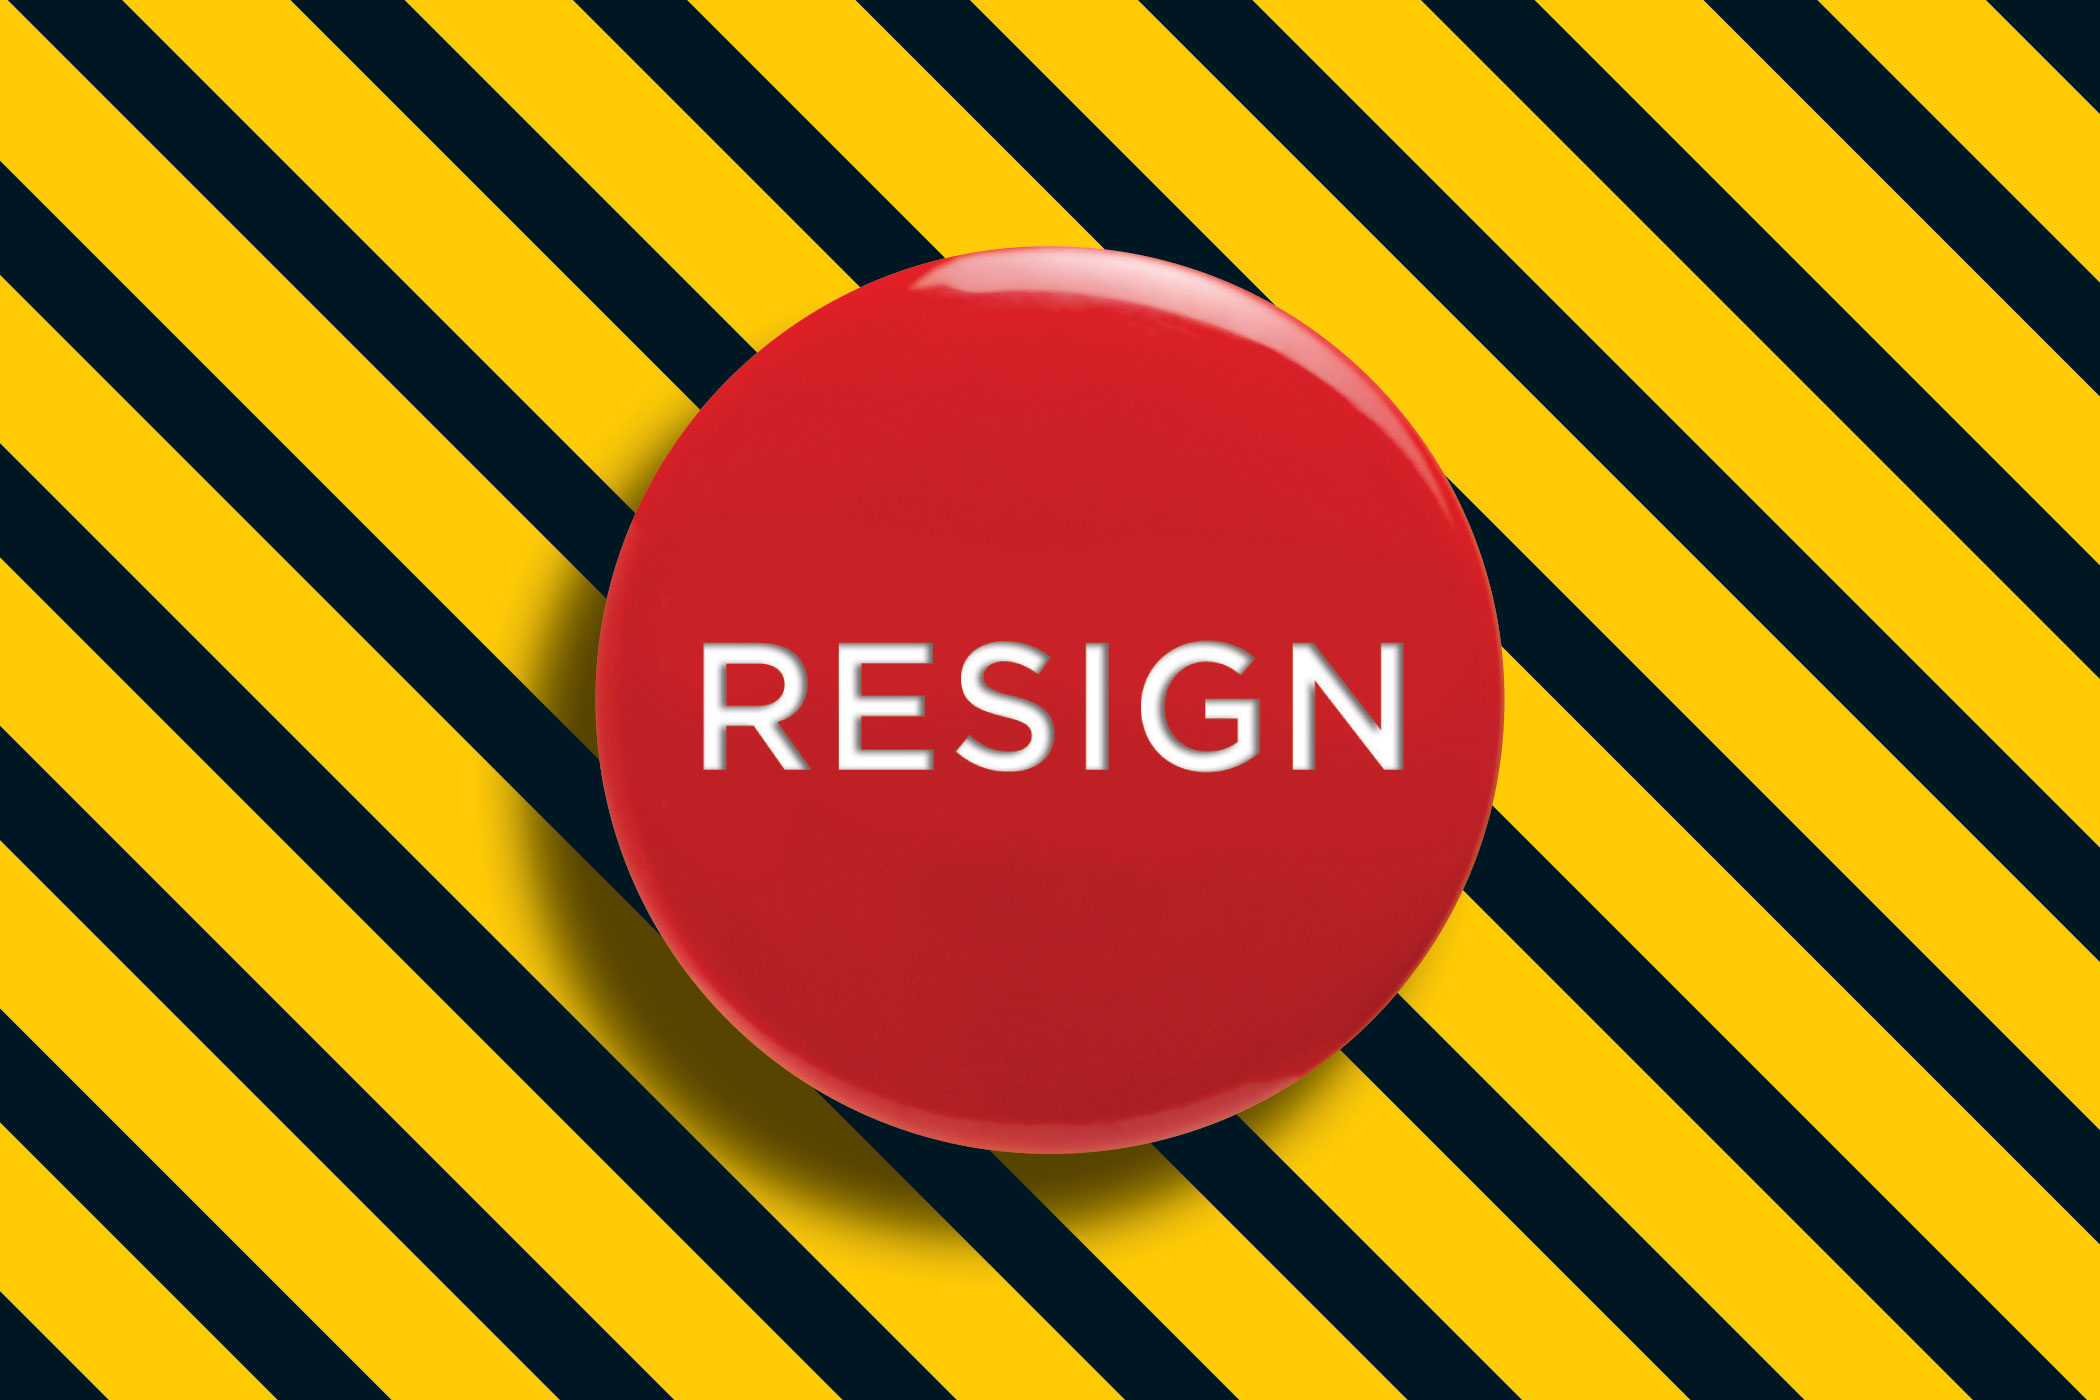 resign button background 3x2